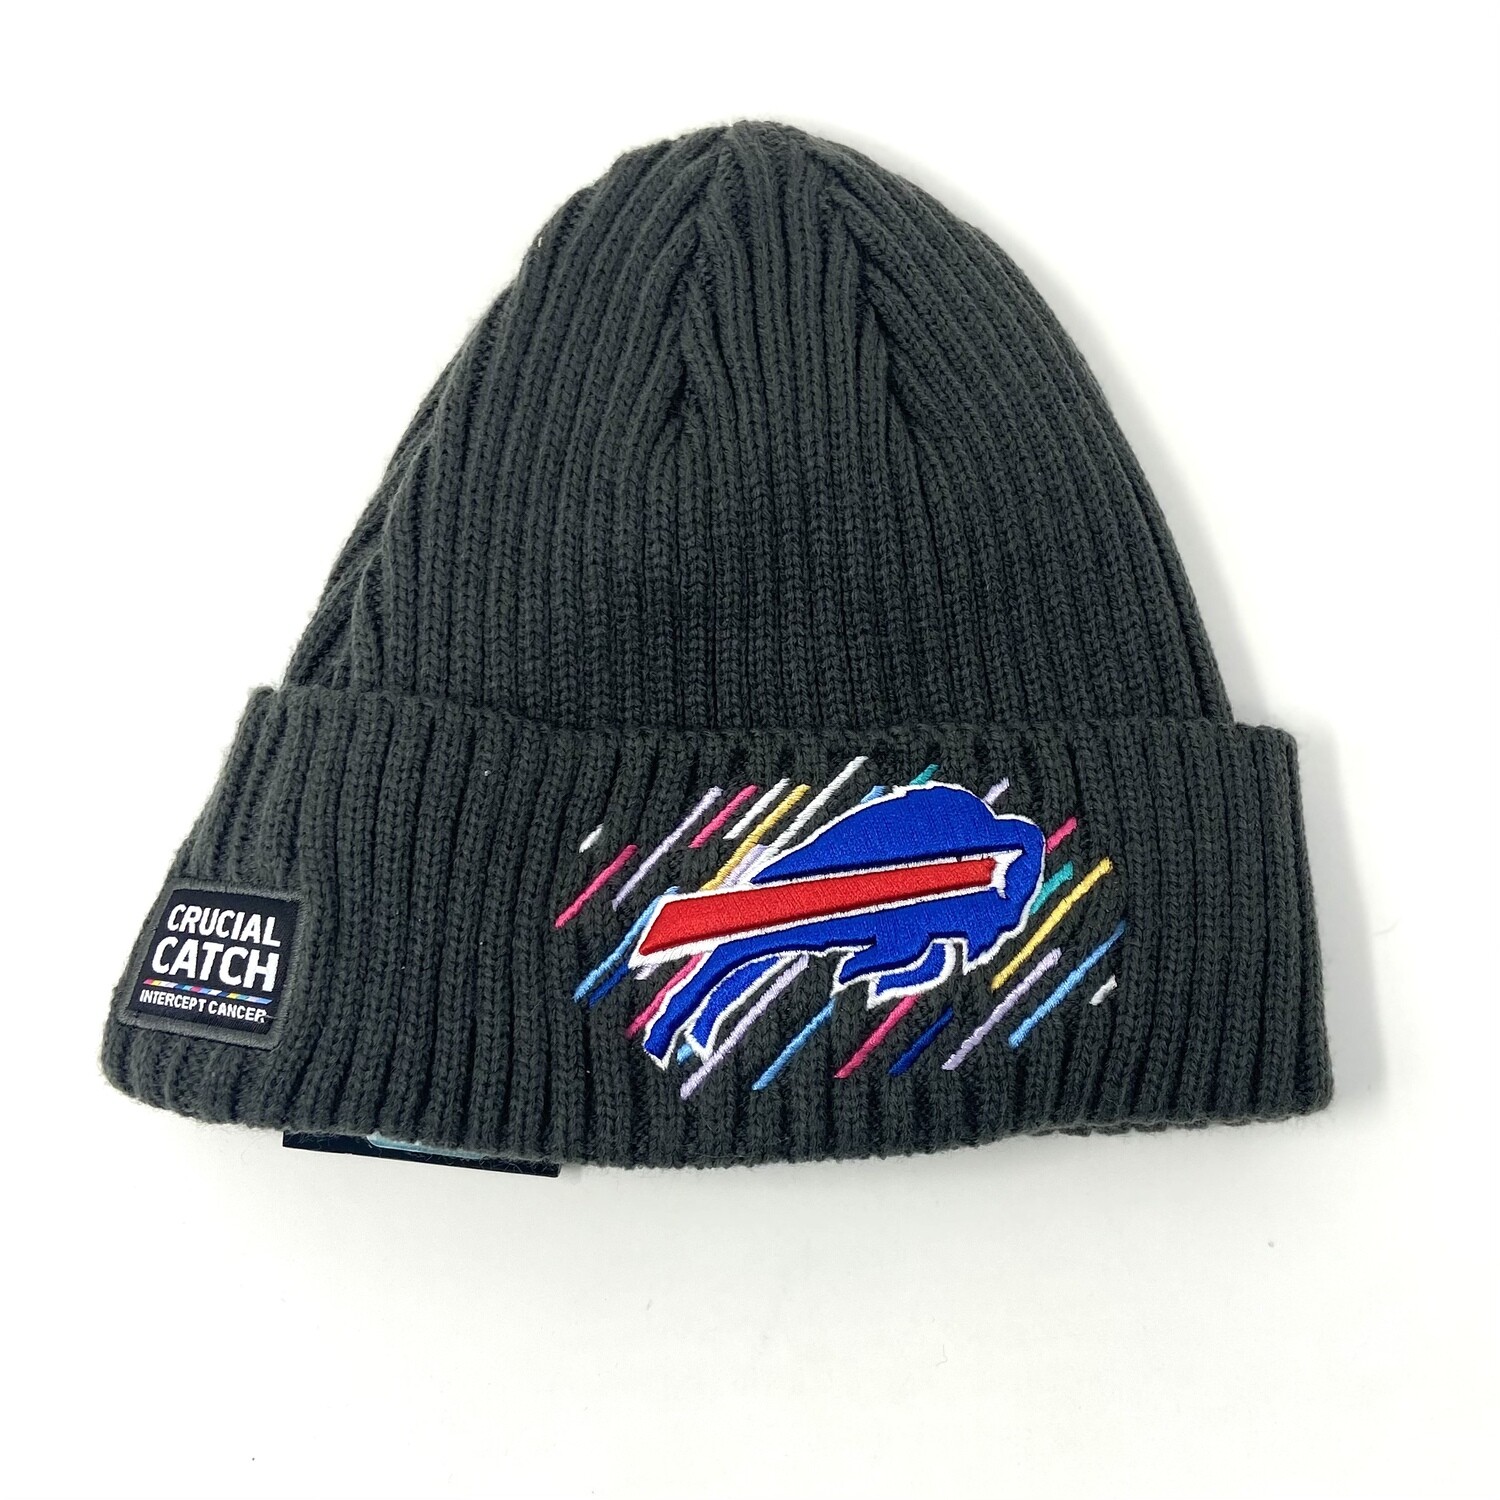 Buffalo Bills New Era Crucial Catch Cuff Pom Knit Hat